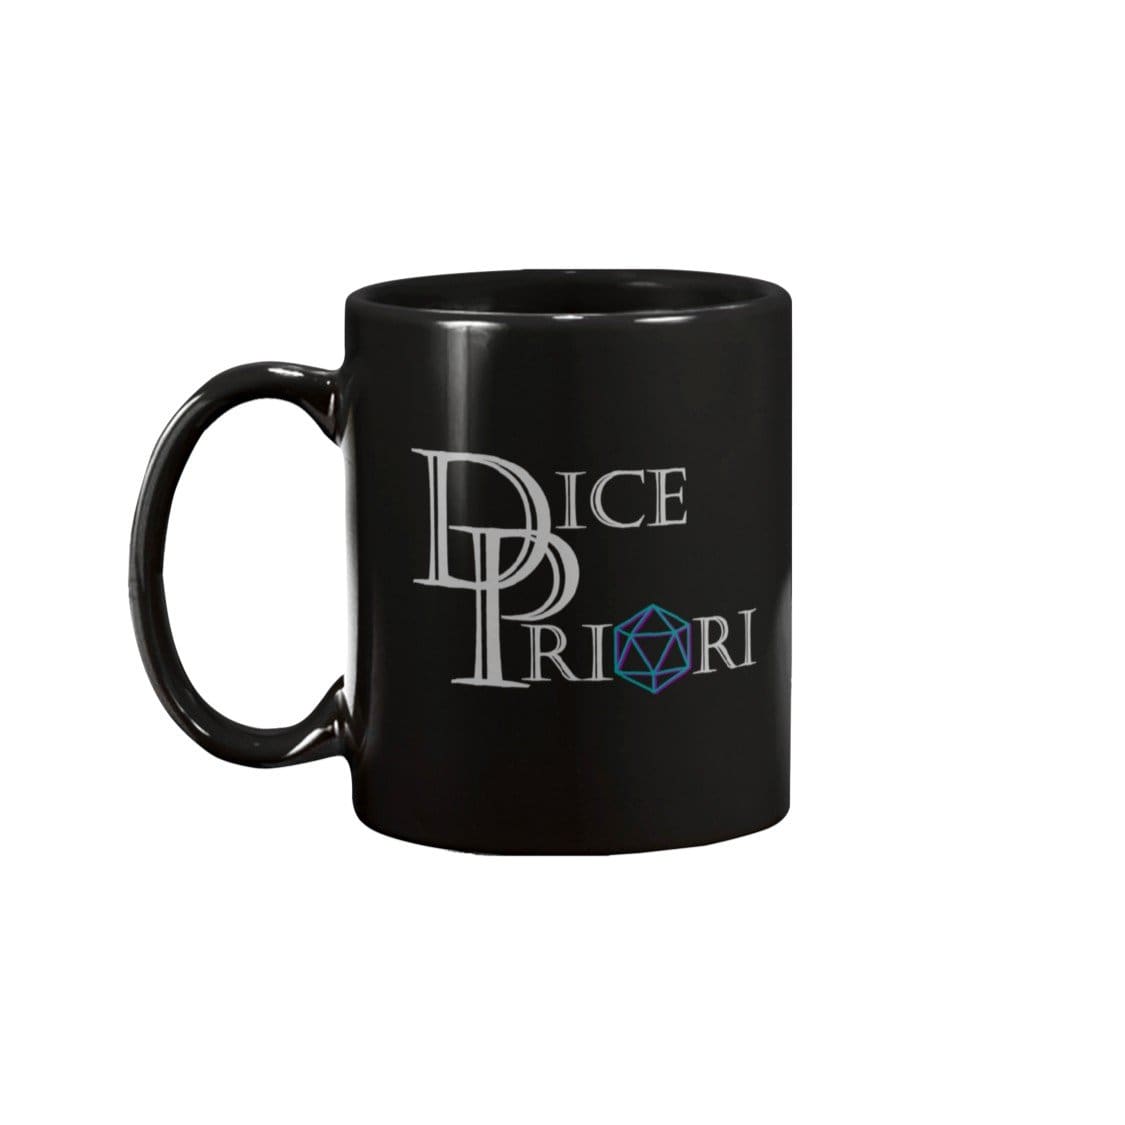 Dice Priori Classic Text Logo 11oz Coffee Mug - Black / 11OZ - Dice Priori